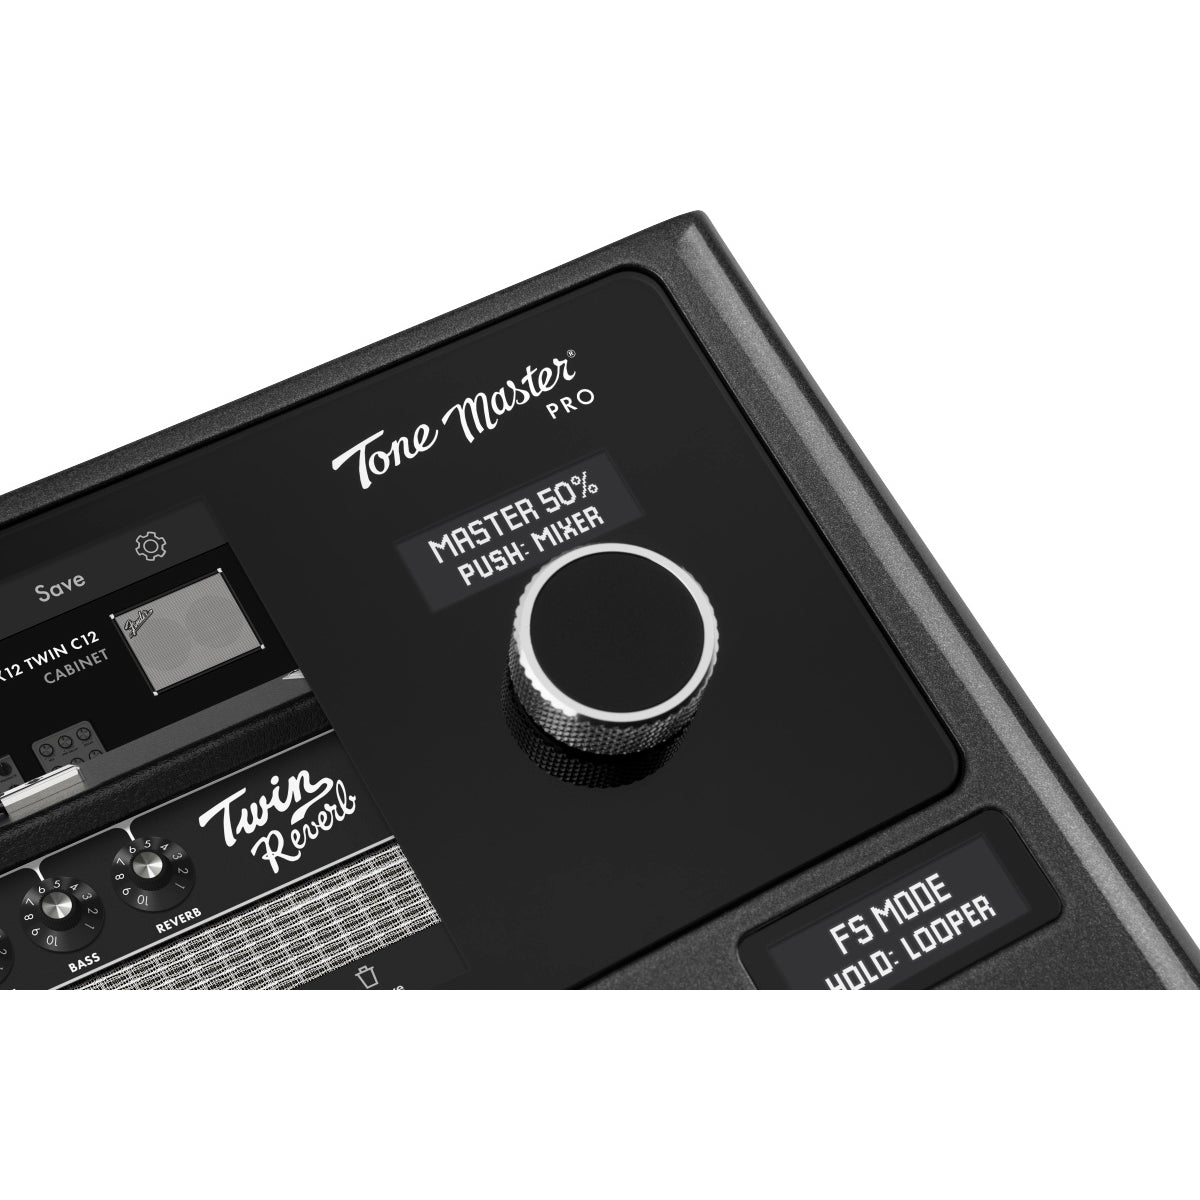 Fender Tone Master Pro Multi Effects Guitar Workstation